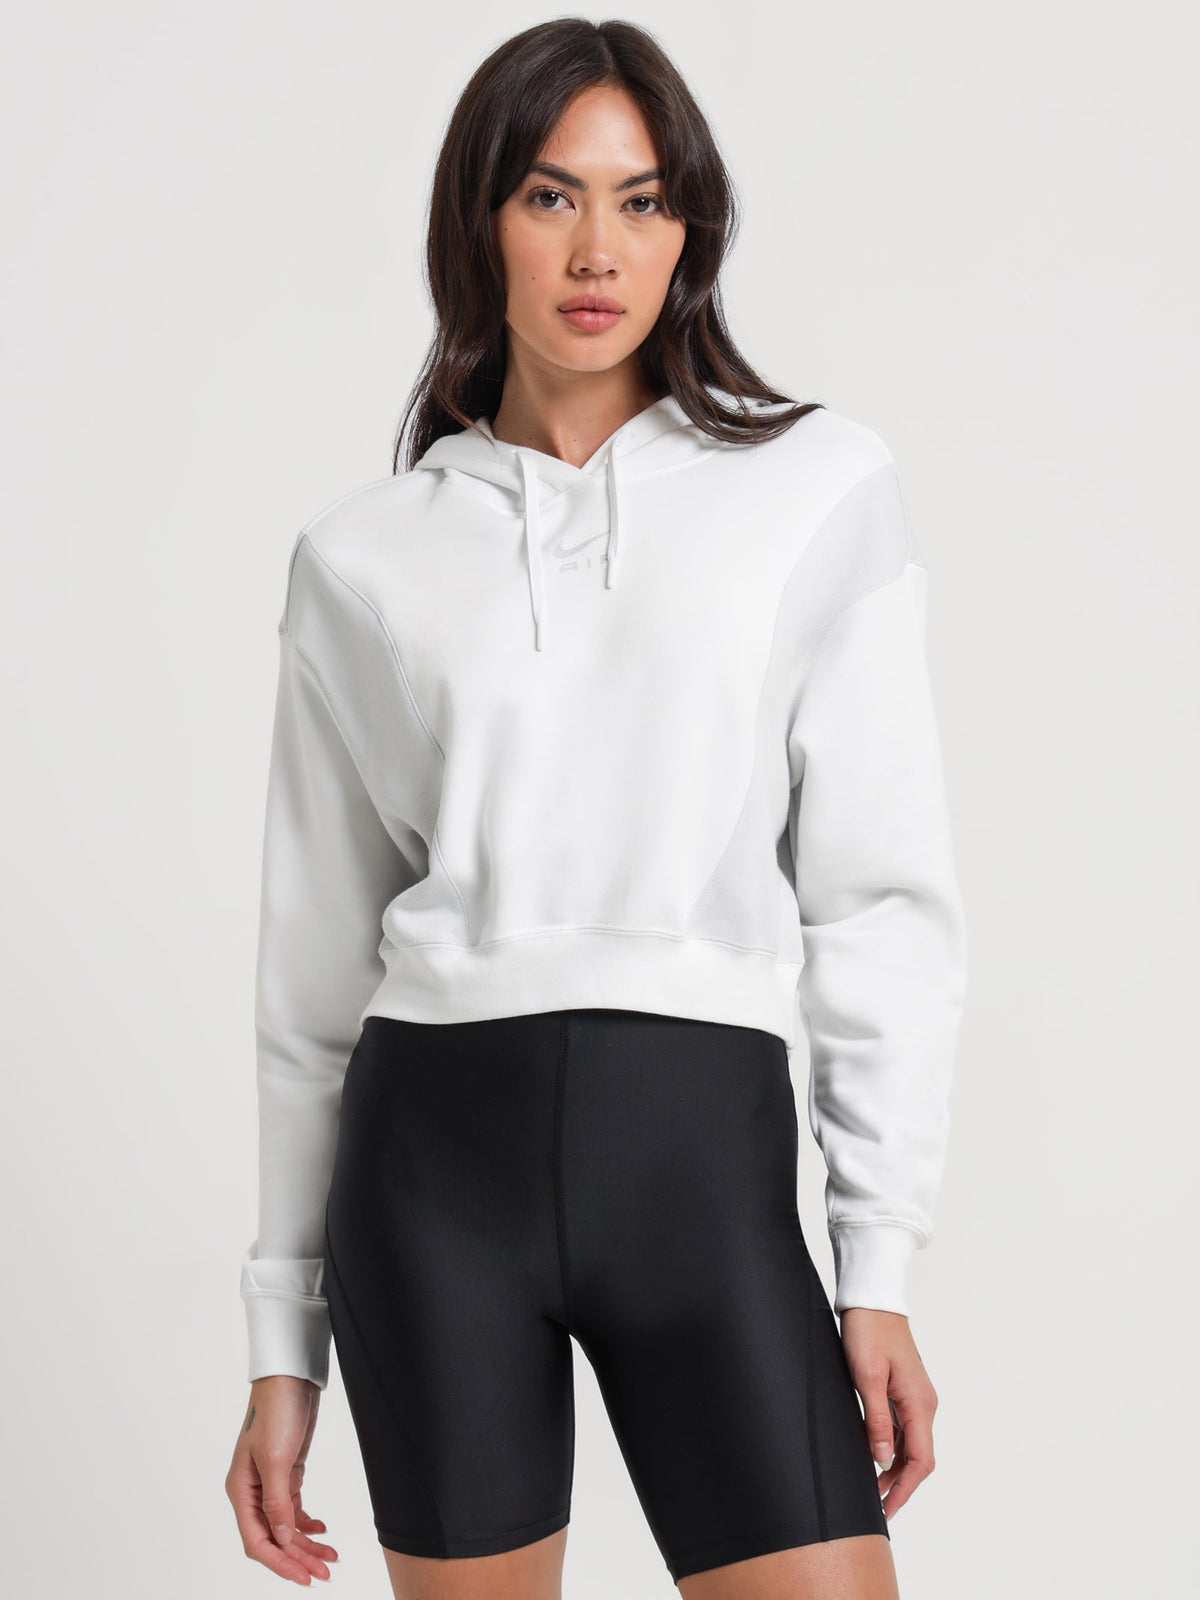 Nike Air Crop Top Sweatshirt Women - White